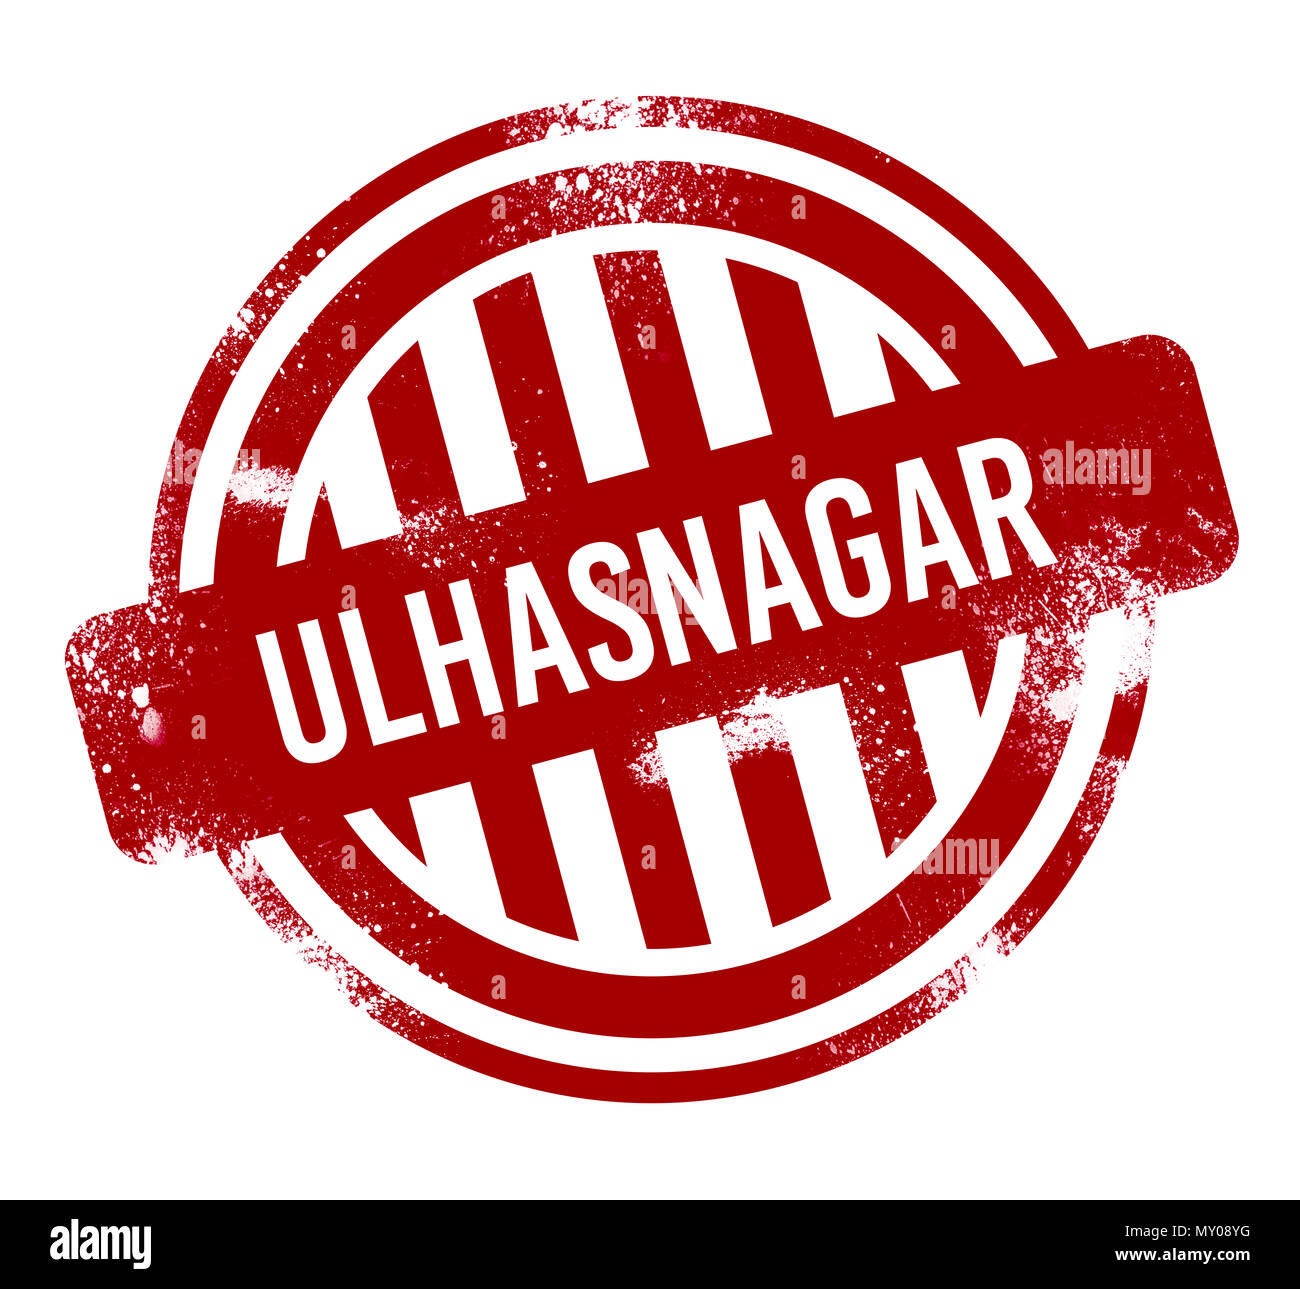 Ulhasnagar - Red grunge button, stamp Stock Photo